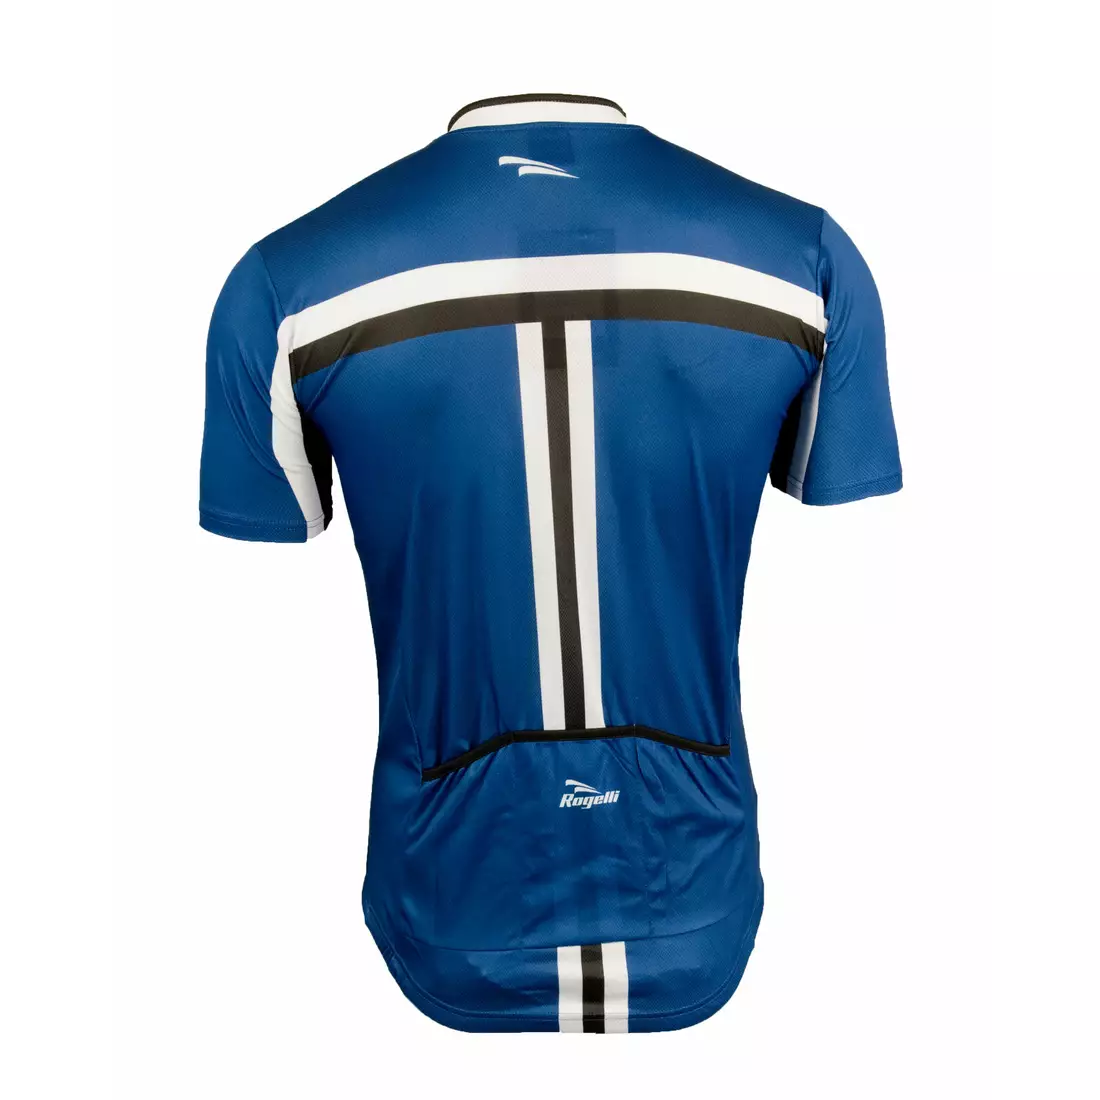 Tricou ciclist barbatesc ROGELLI BRESCIA 001.065, Albastru